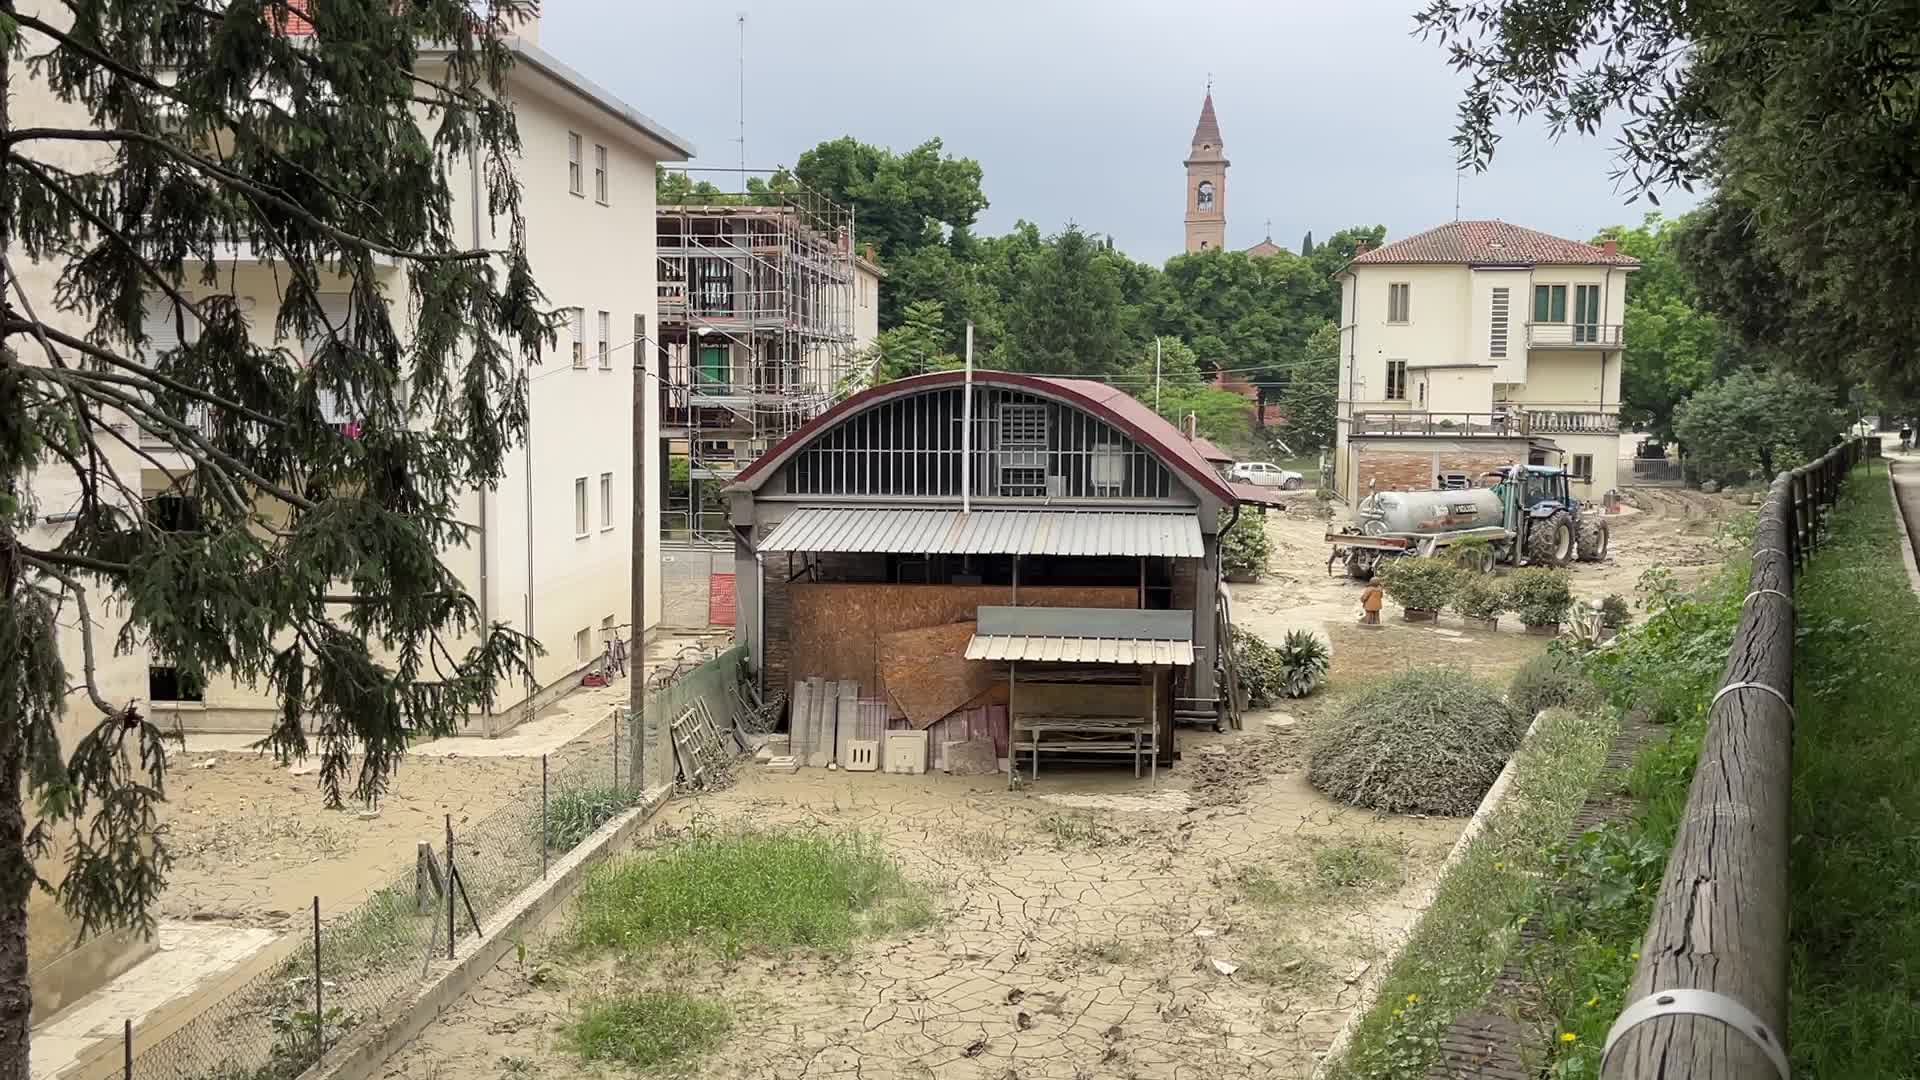 The flood damage in Faenza in Emilia Romagna